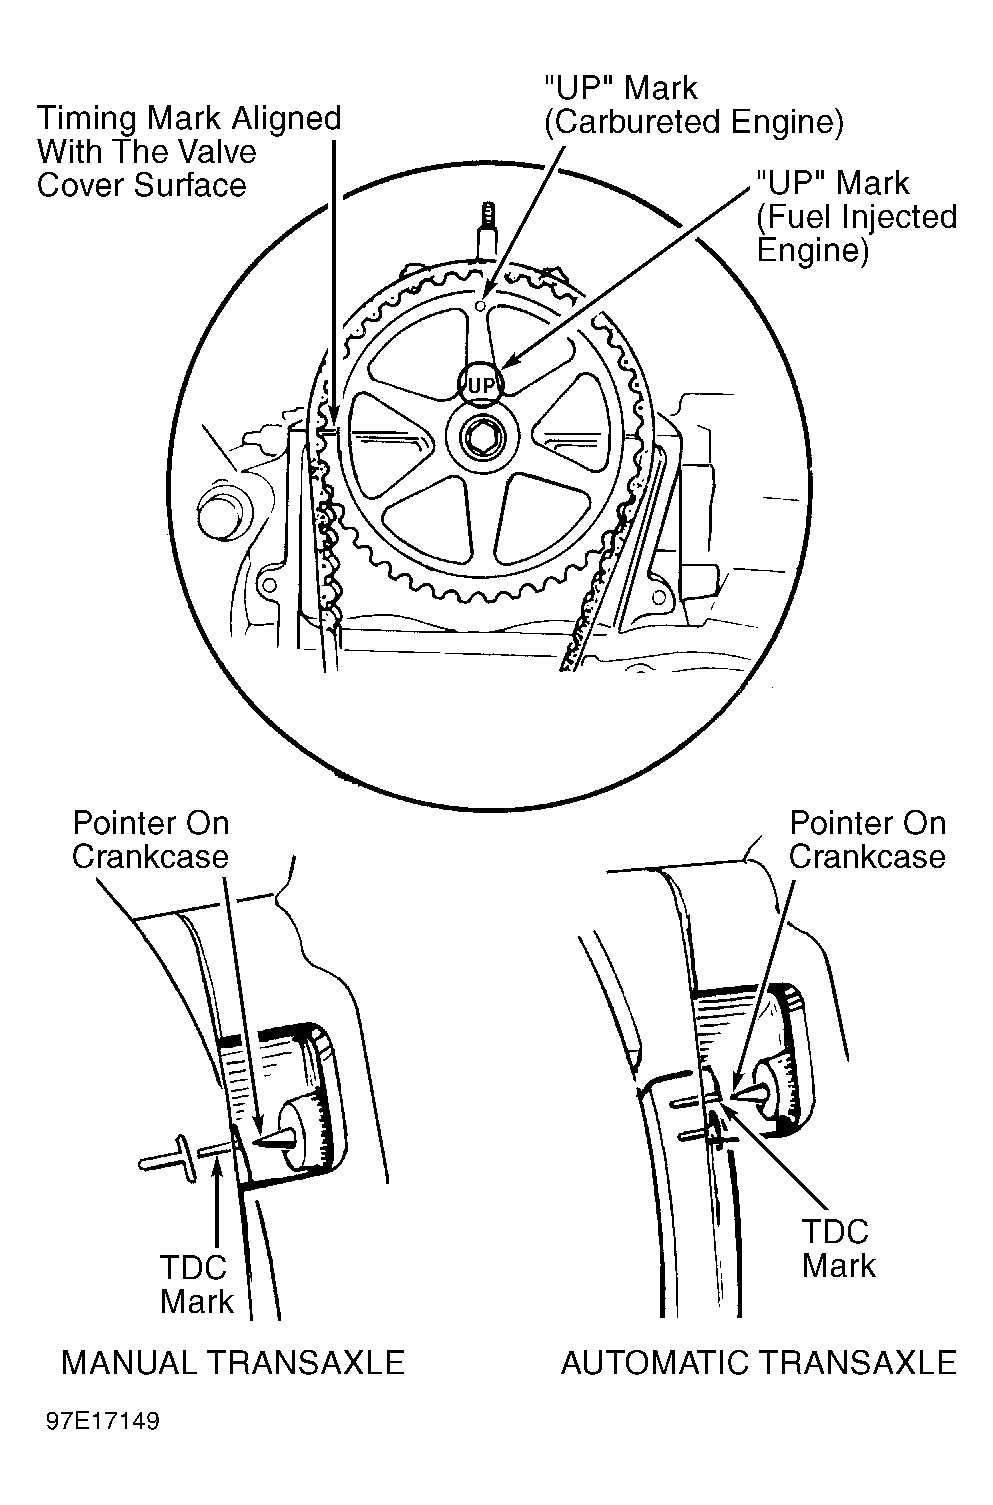 1983 Honda Accord Serpentine Belt Routing and Timing Belt Diagrams